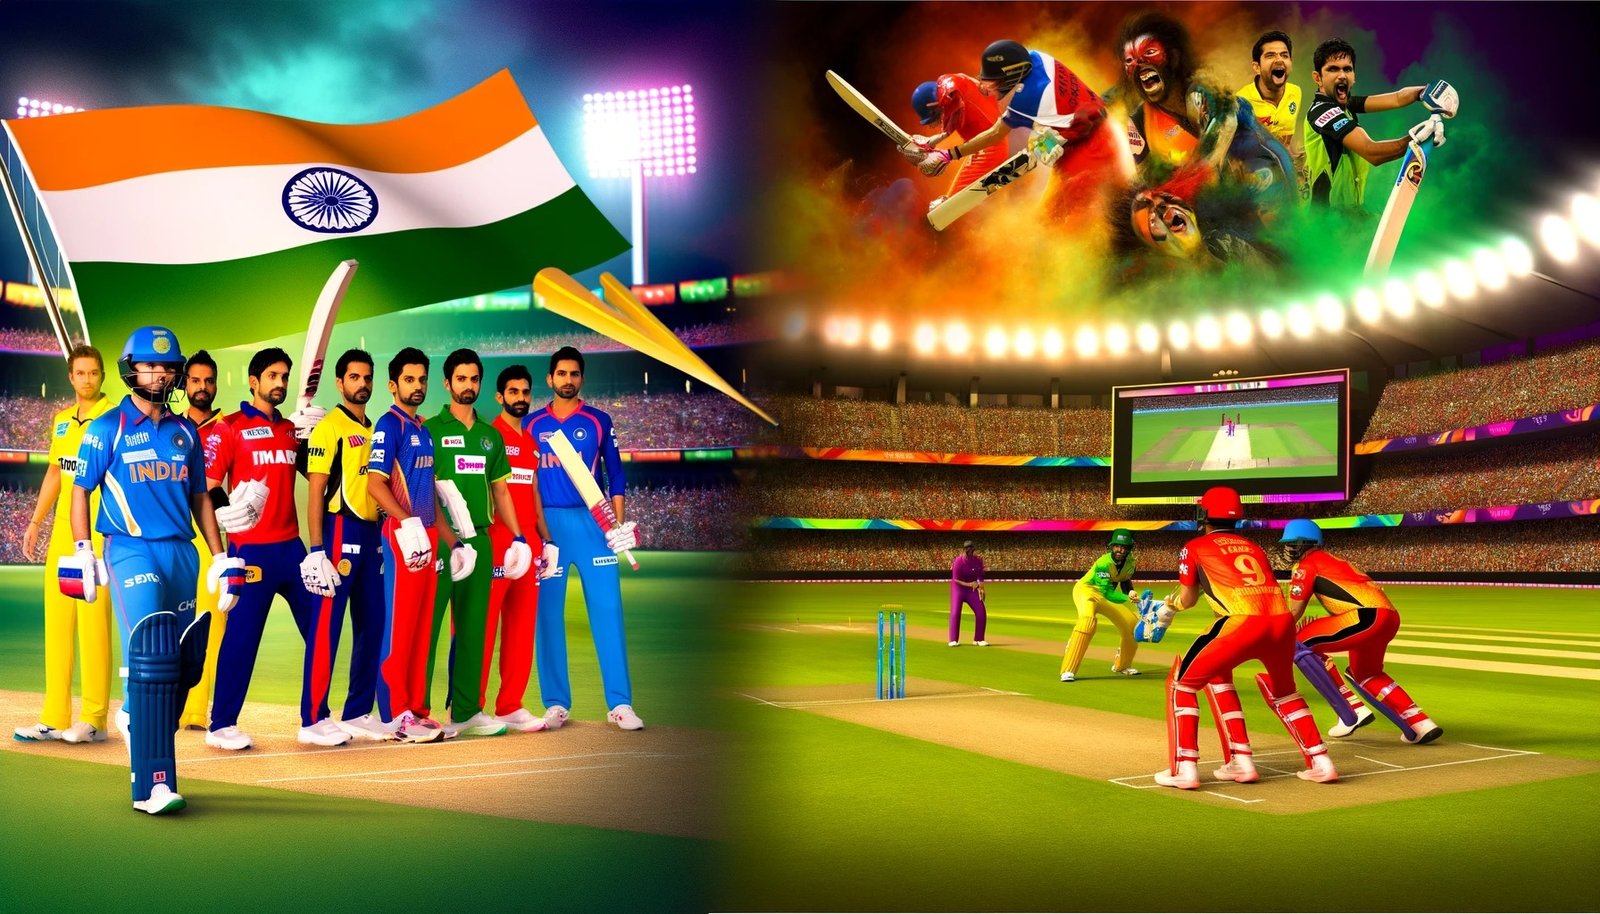 IPL vs T20 WC: Franchise Cricket Leads